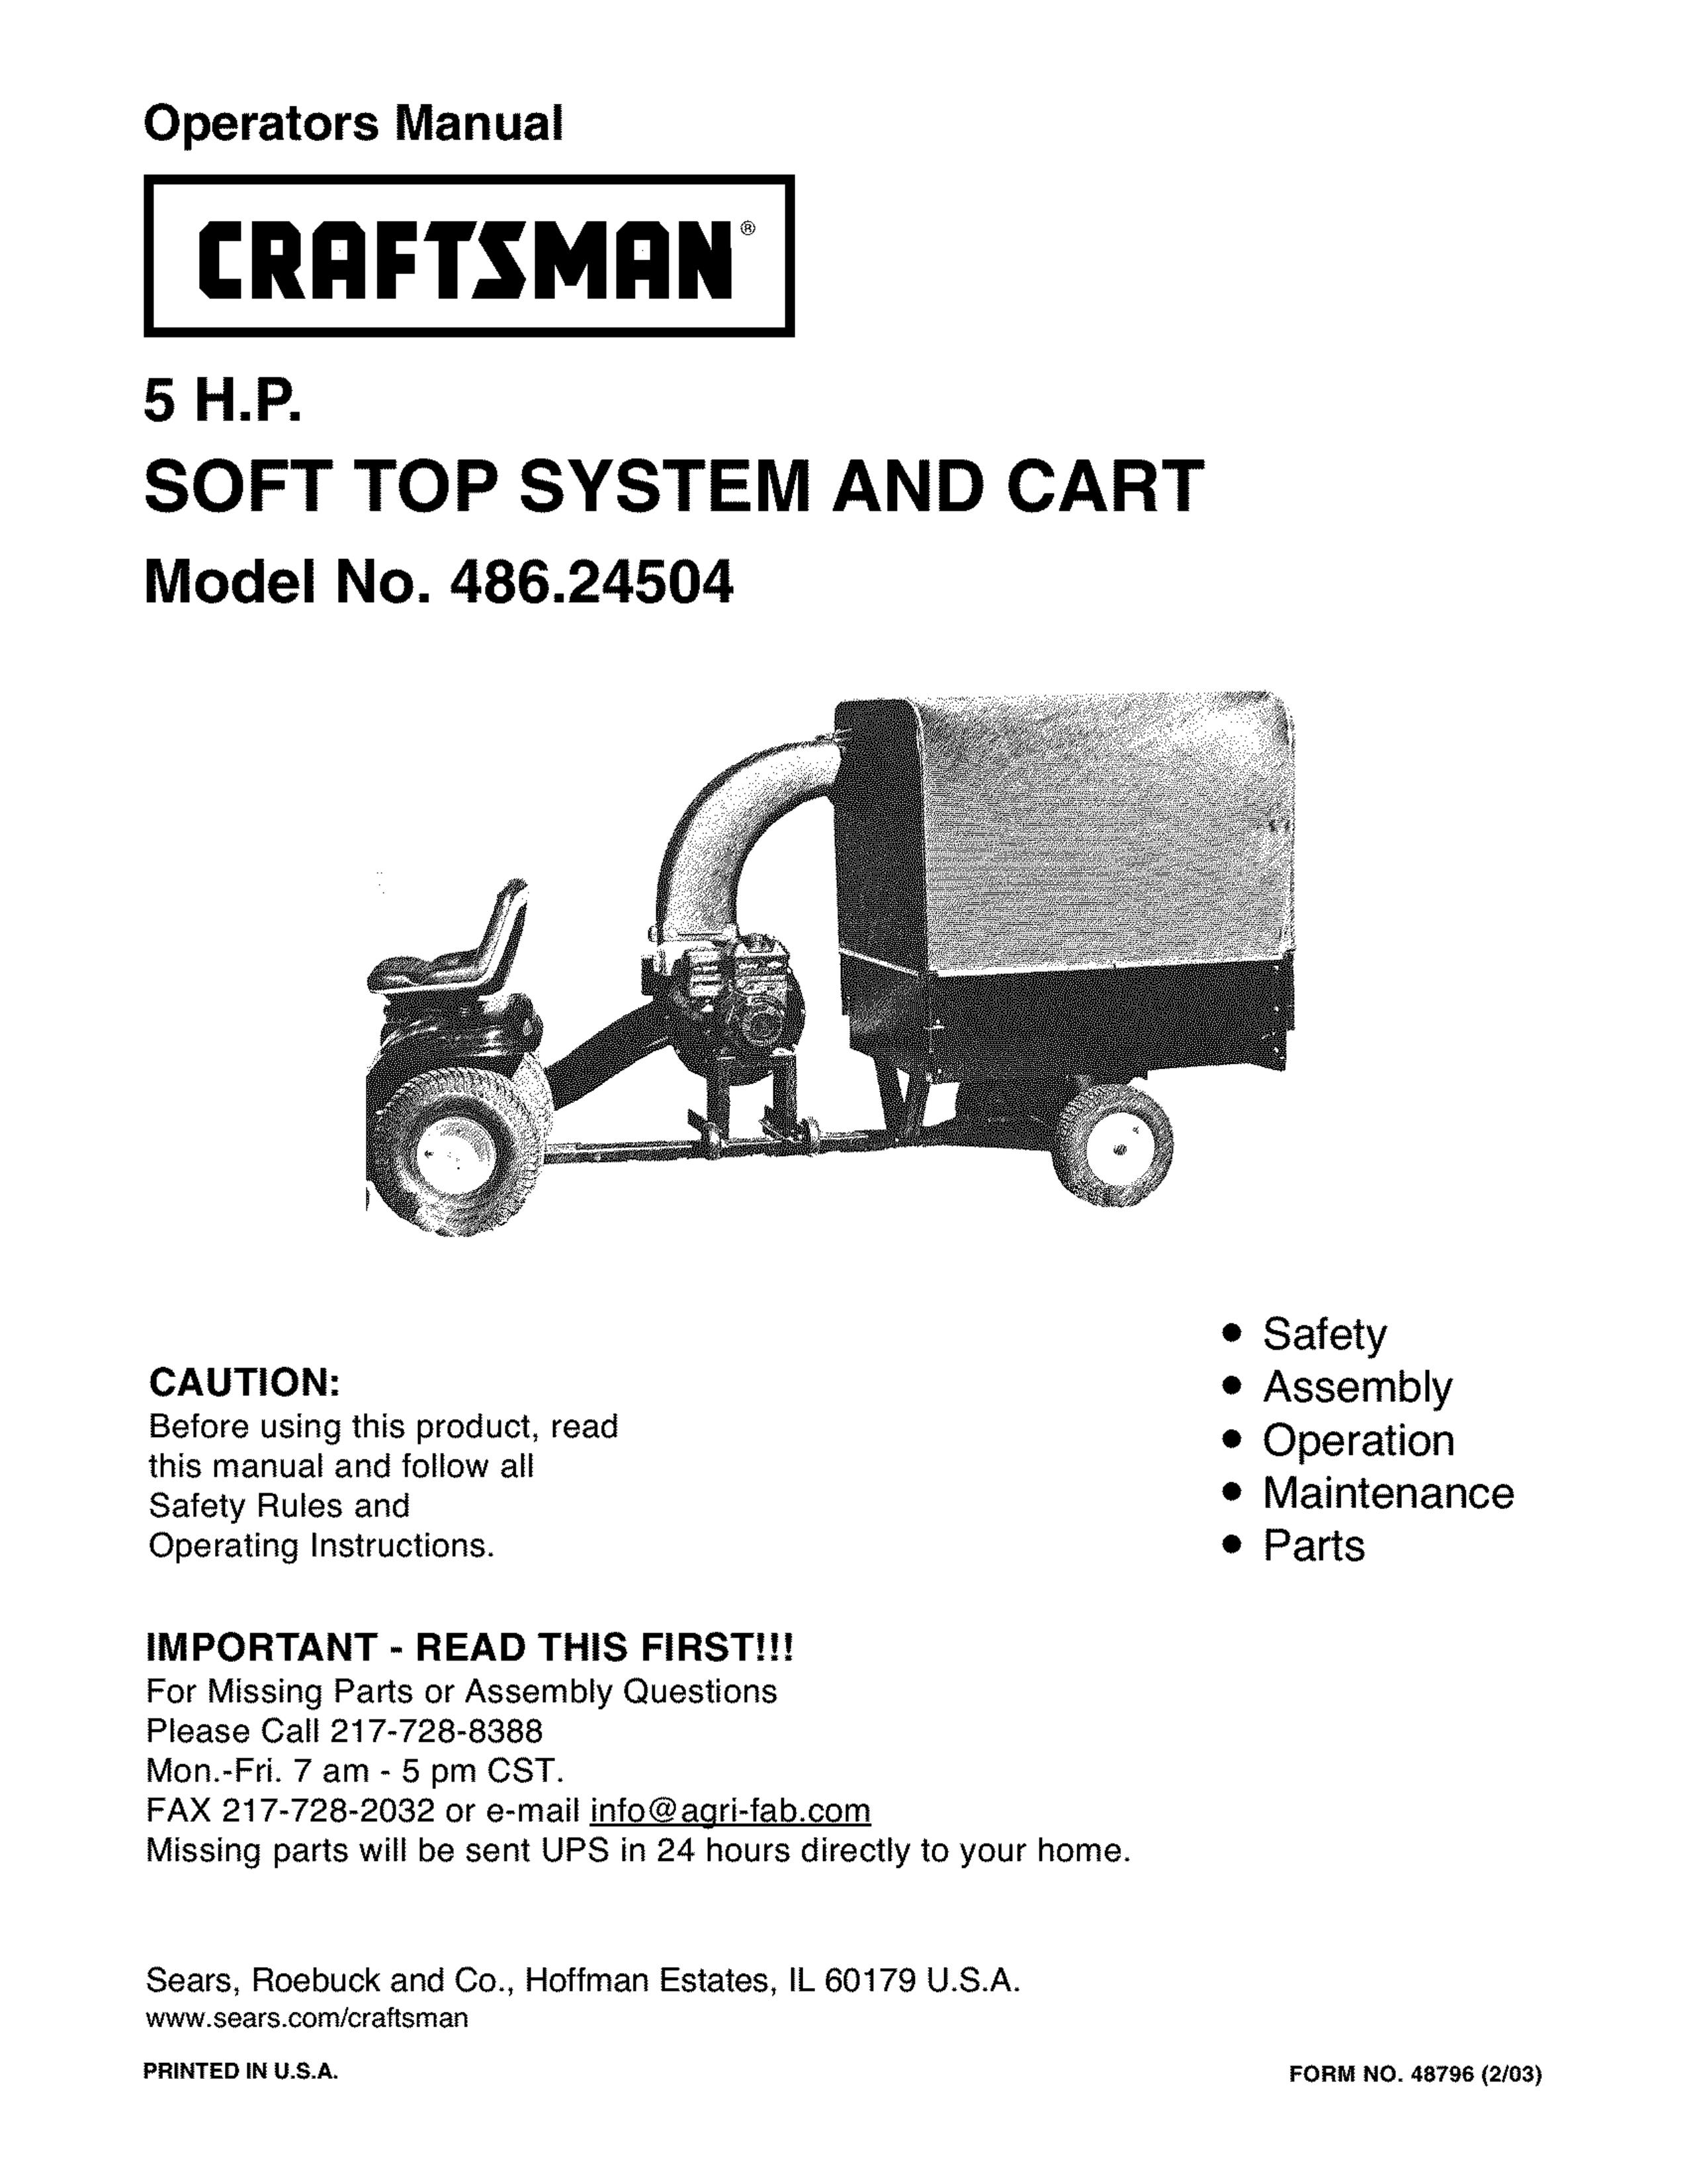 Craftsman 486.24504 Outdoor Cart User Manual